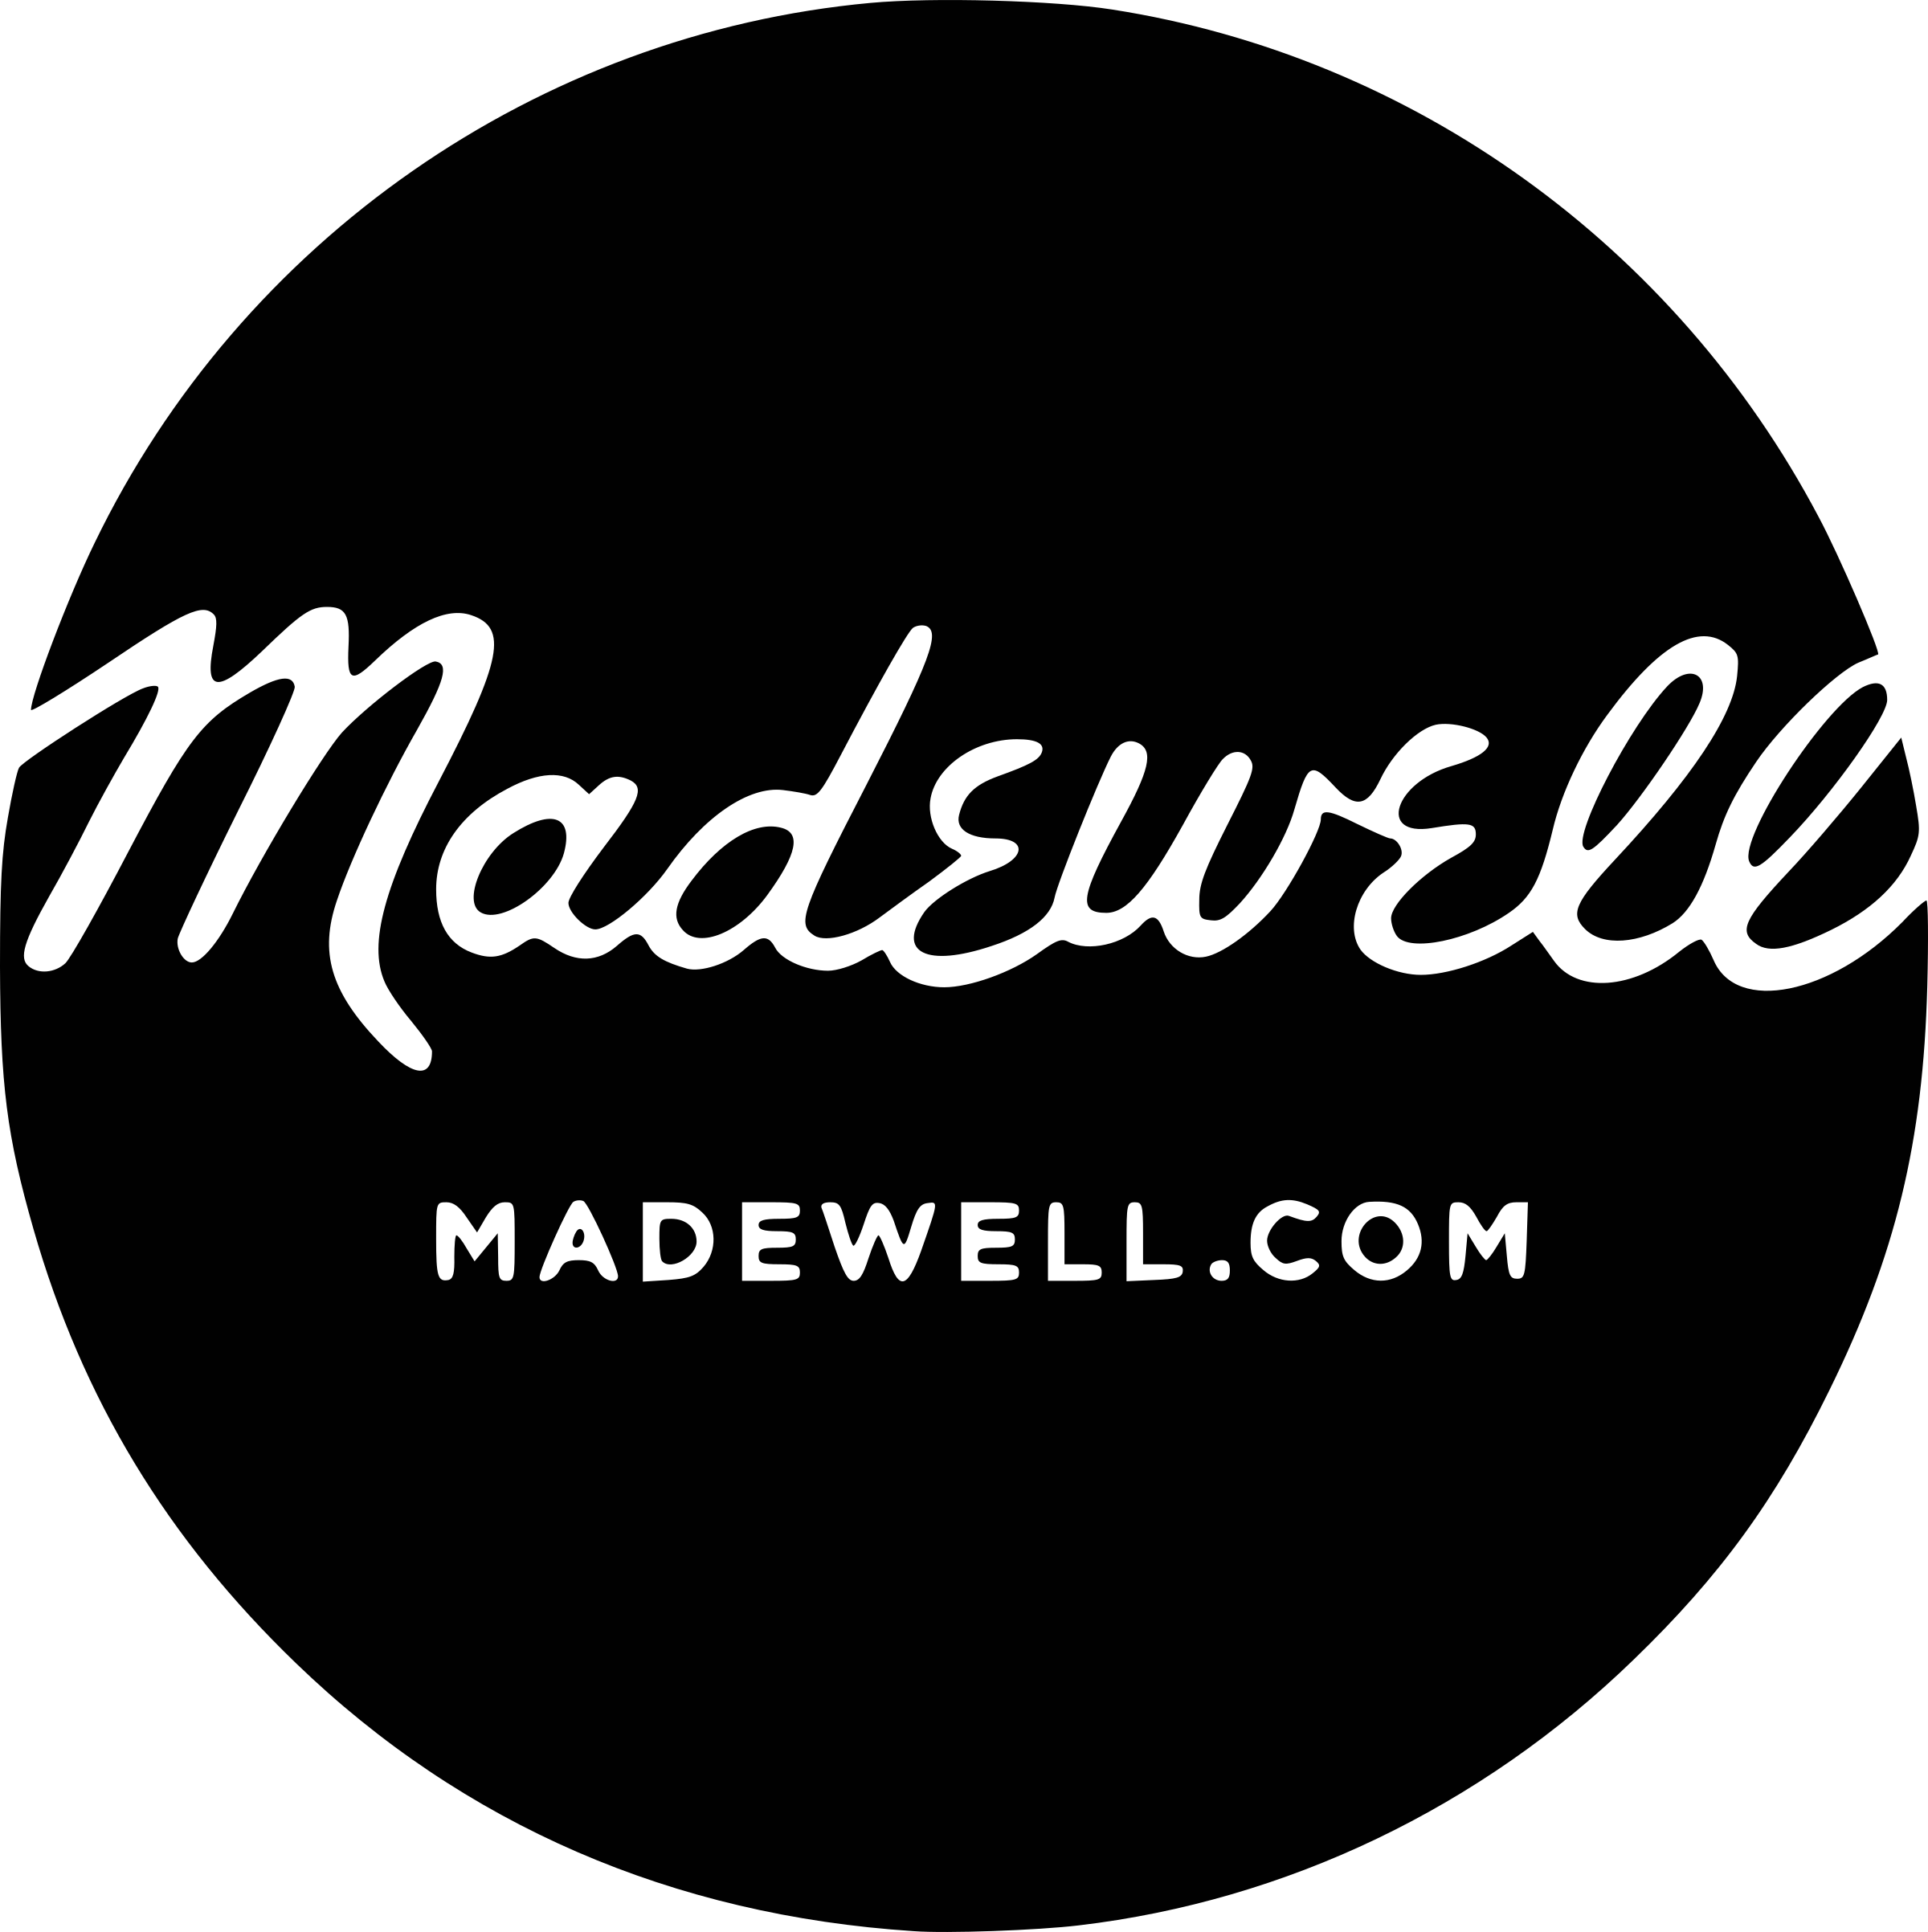 Madewell Logo - Madewell Logo PNG Transparent & SVG Vector - Freebie Supply